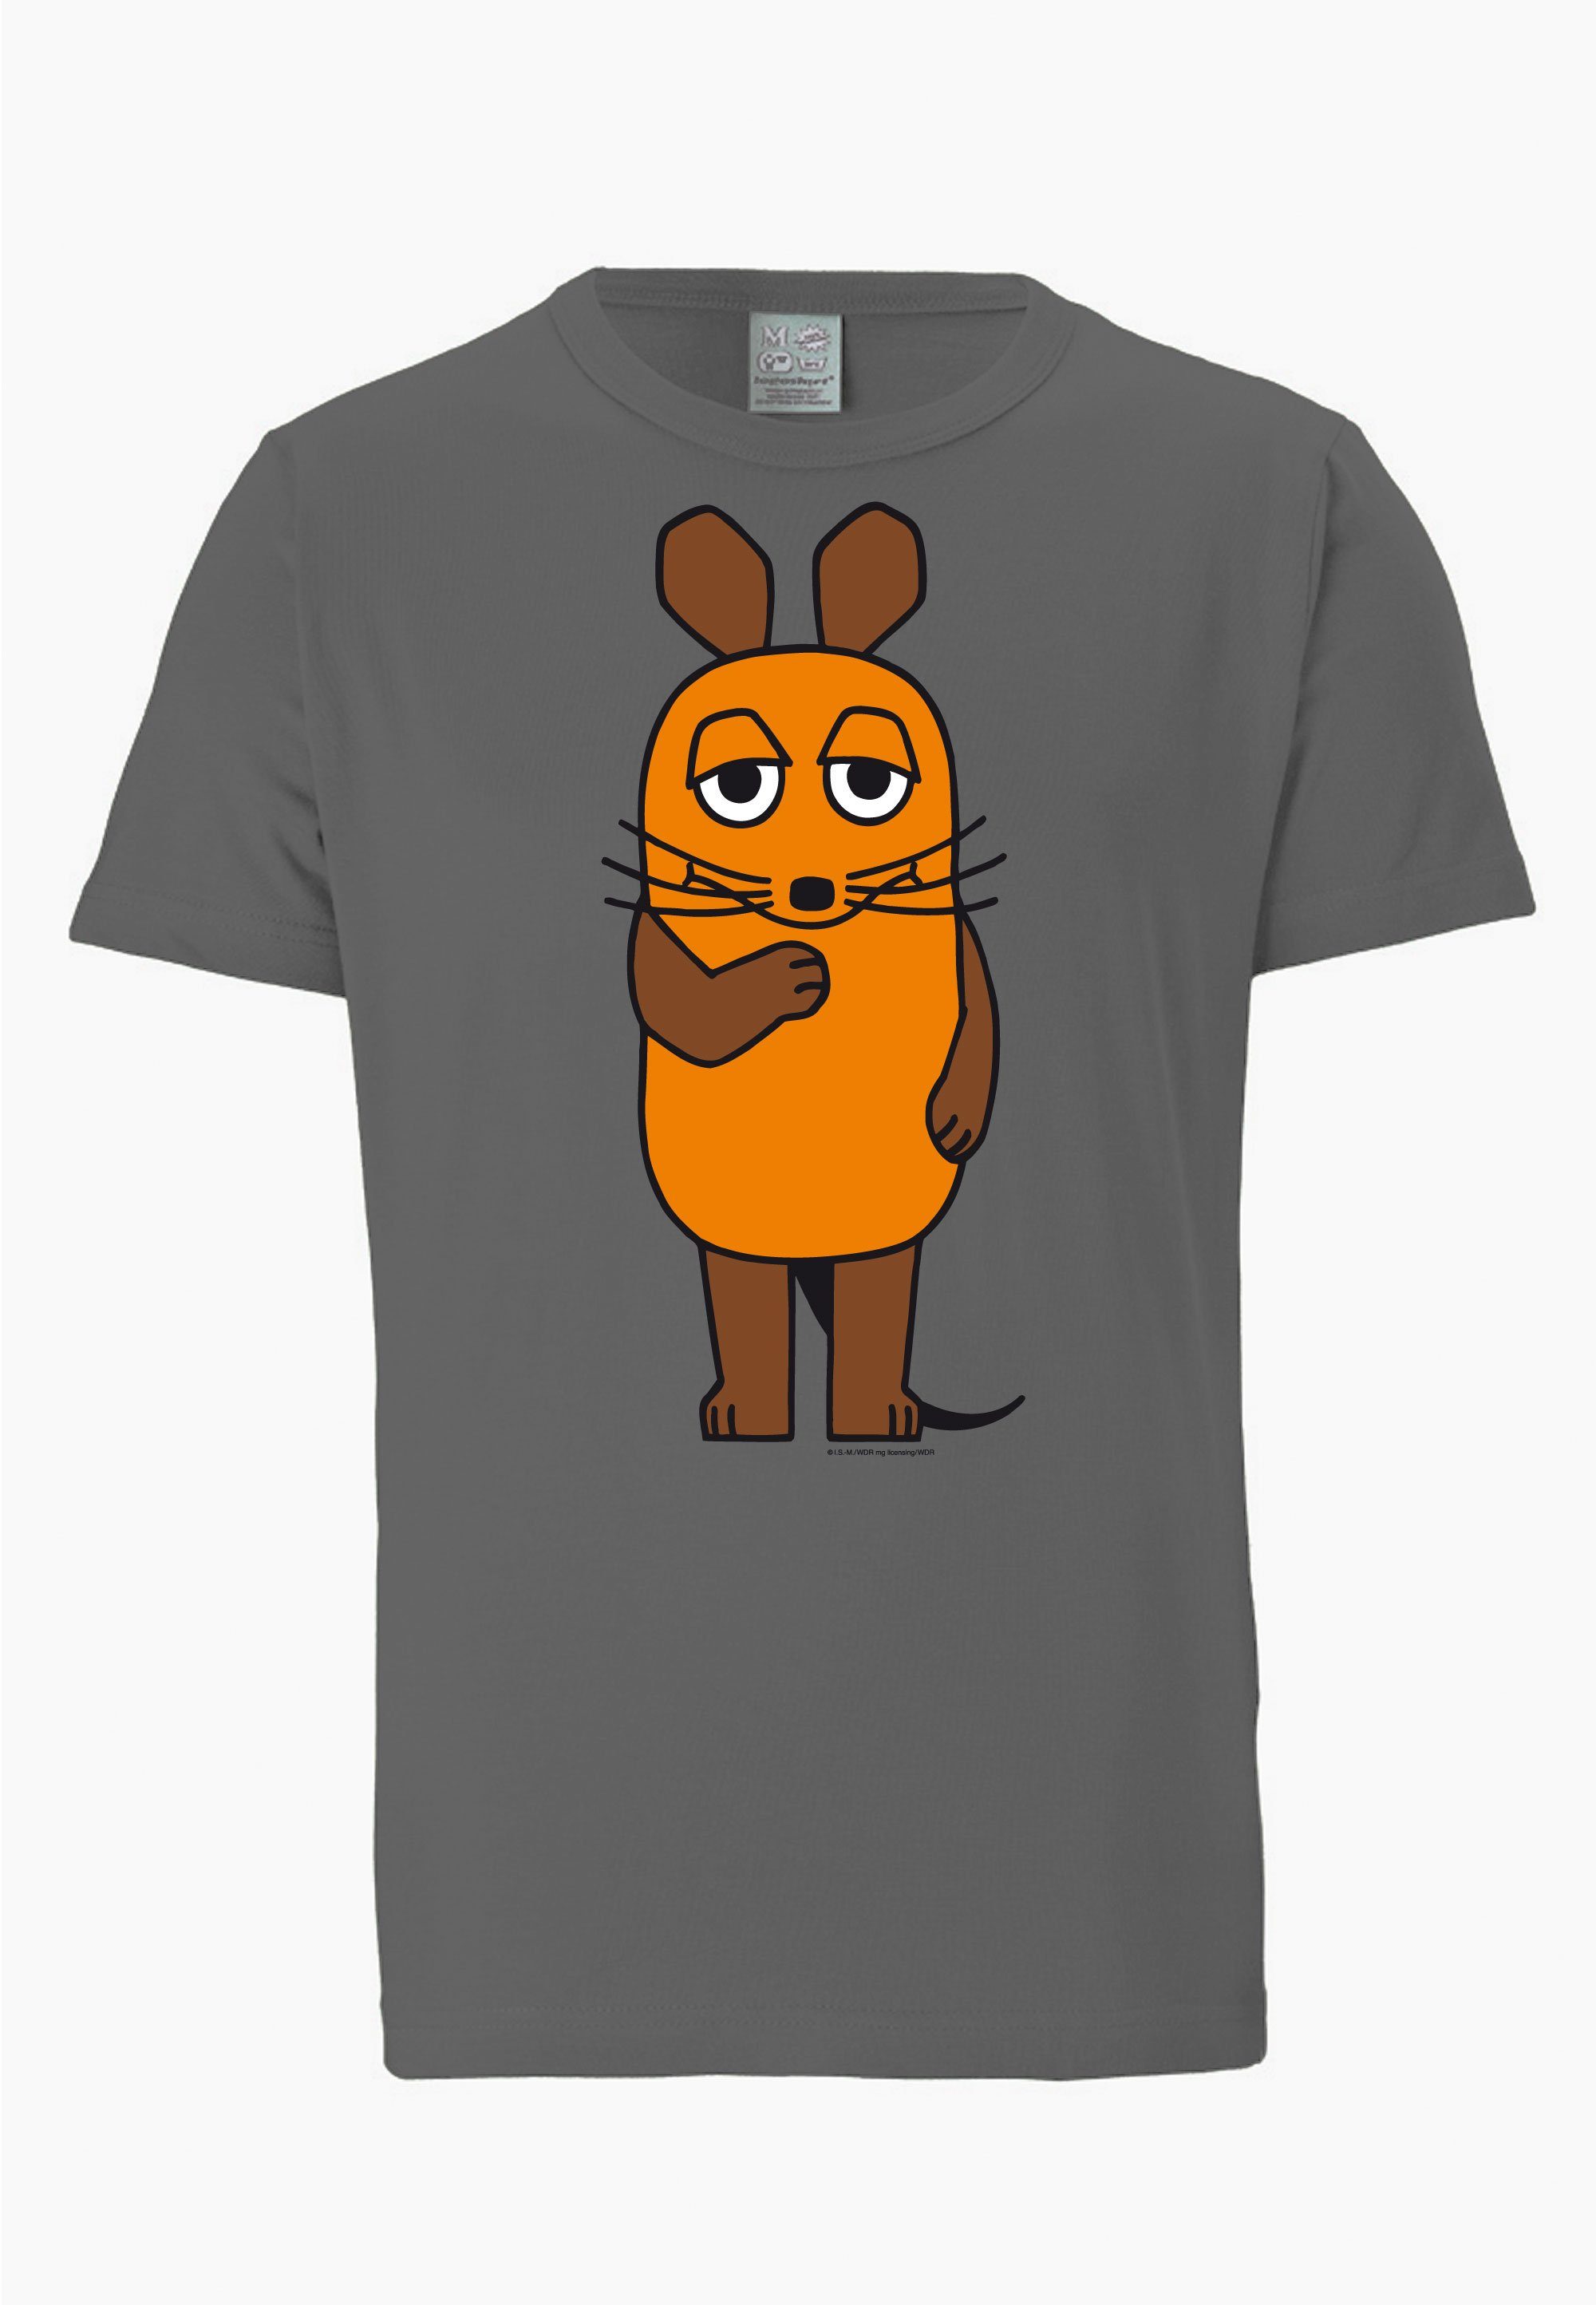 LOGOSHIRT T-Shirt Maus-Print grau Die mit - Sendung Sendung Maus Die mit der mit der Maus